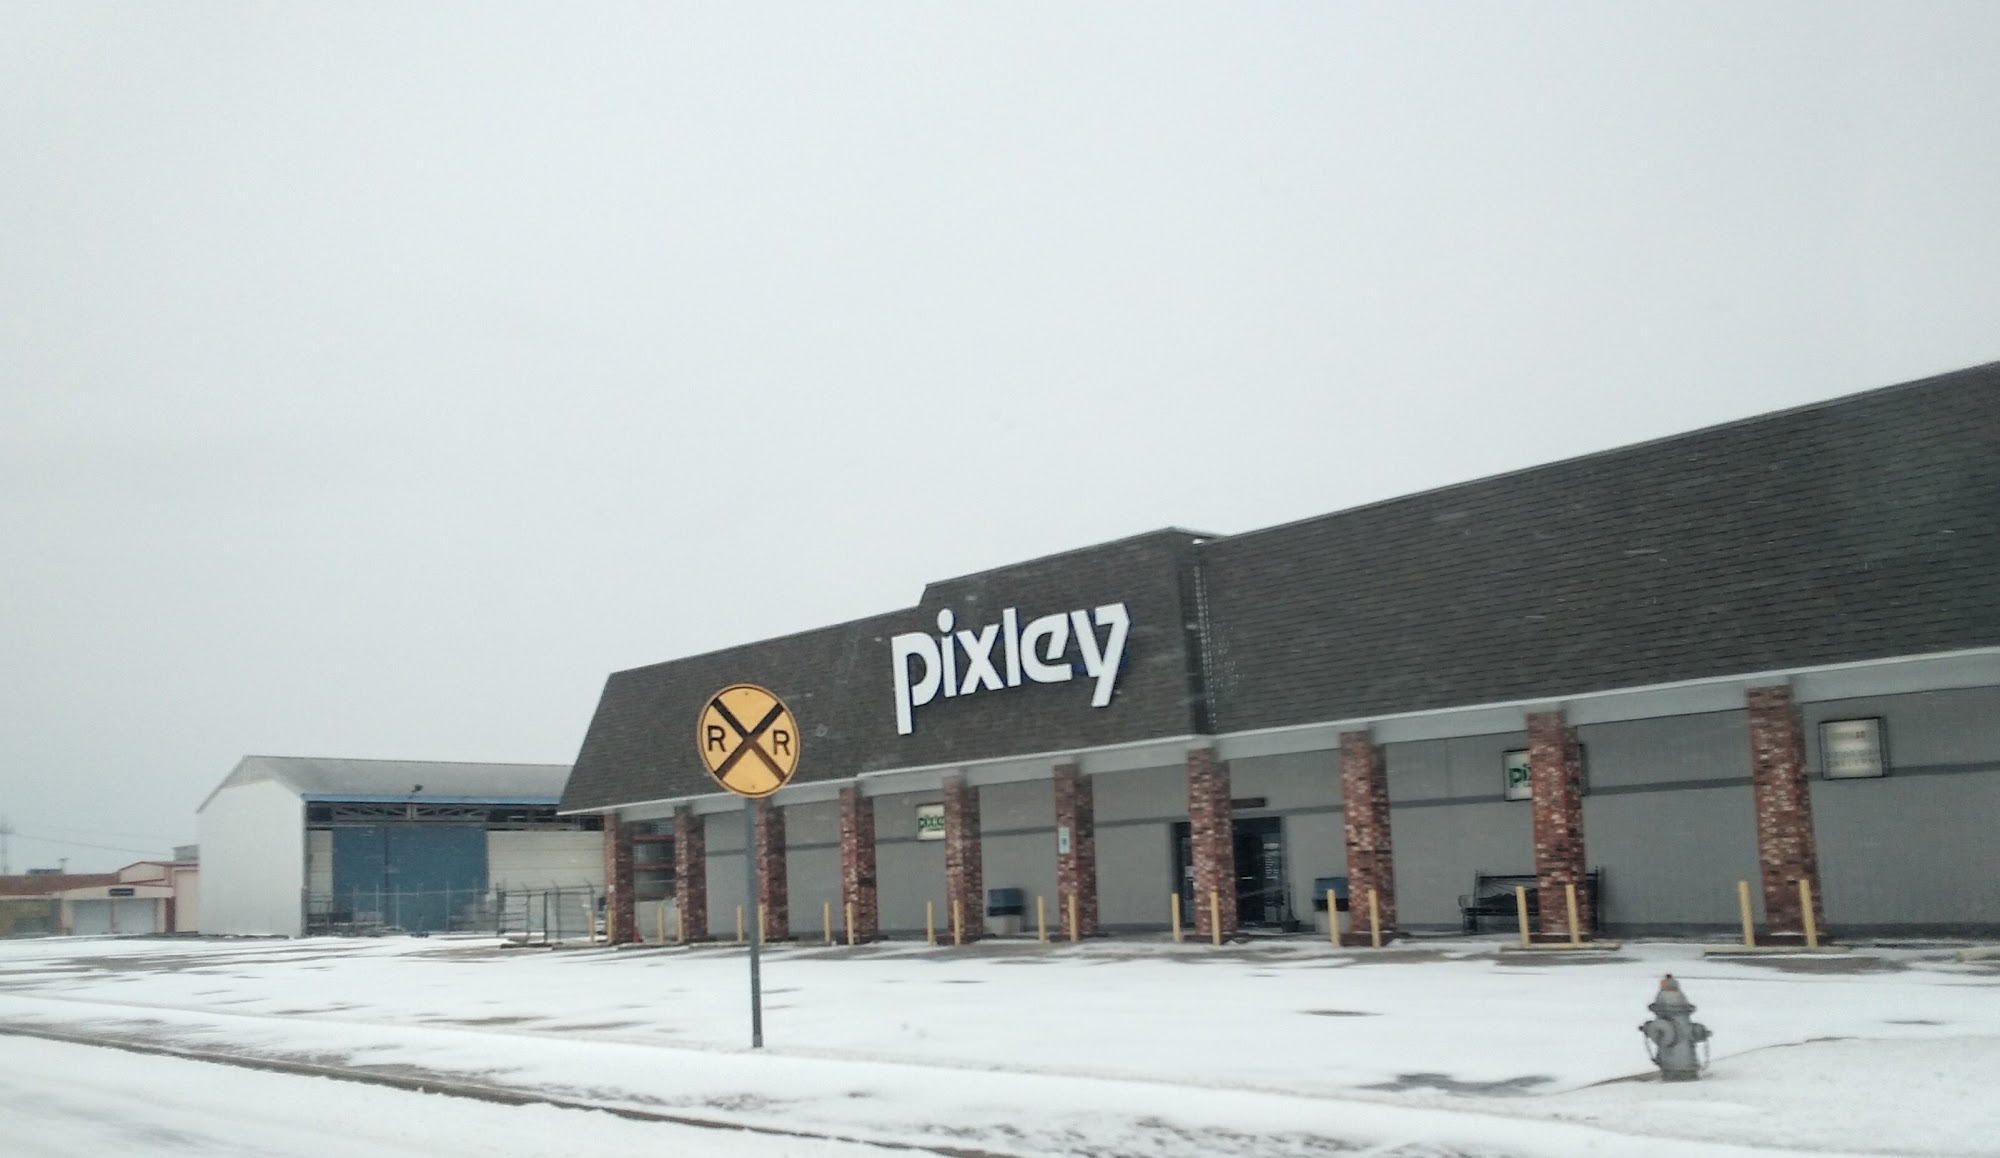 Pixley Lumber Company